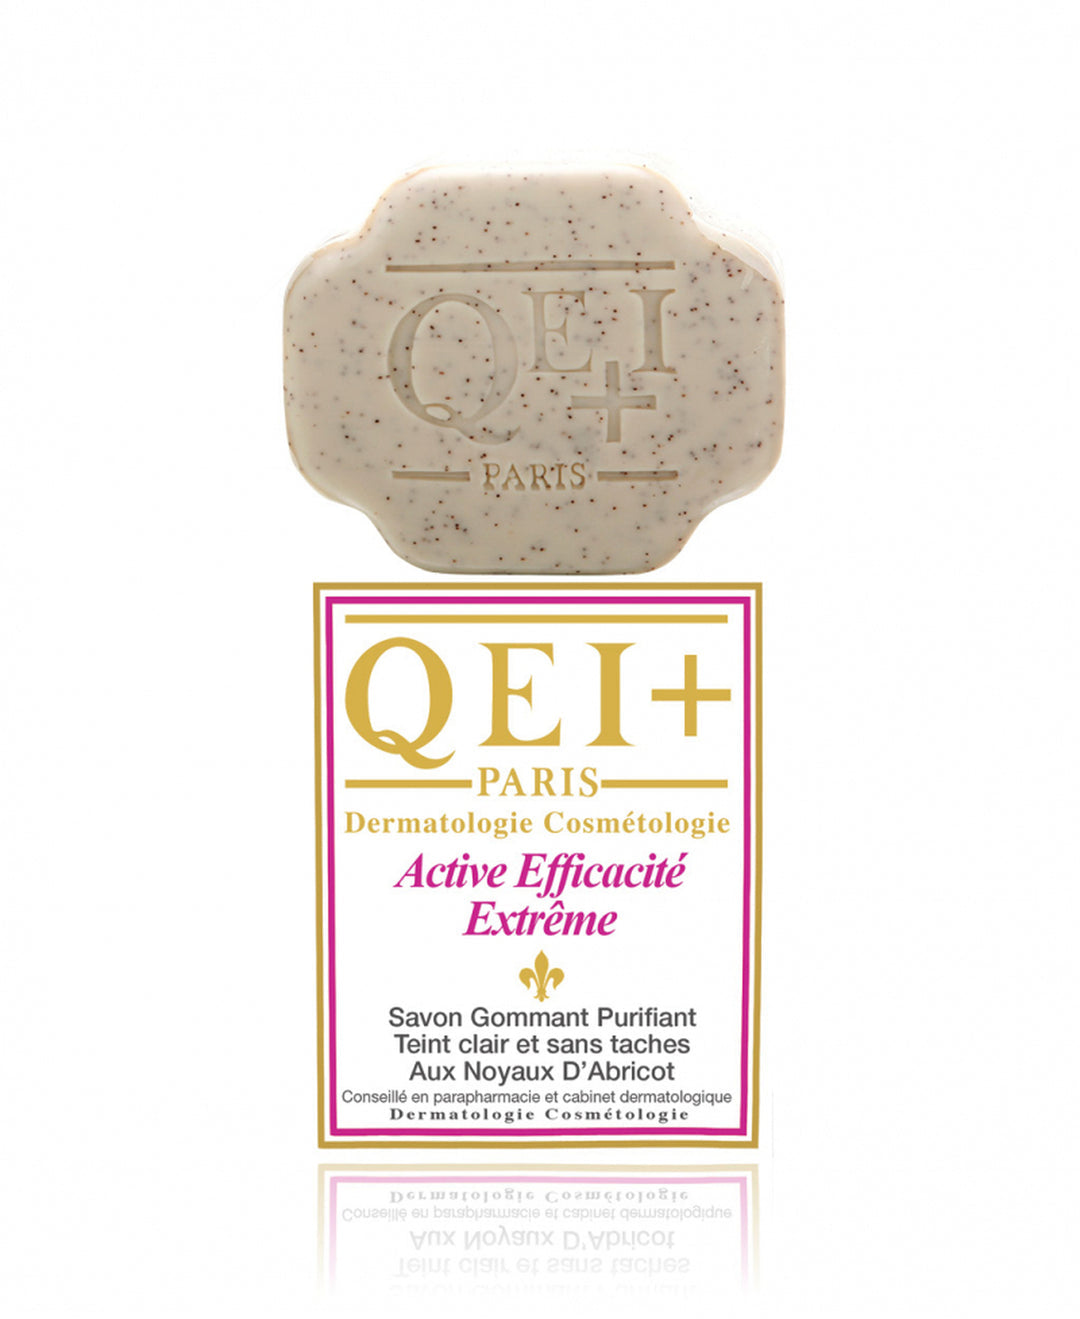 QEI+ Paris Active Efficiency Extreme Exfoliating Purifying Soap 200g